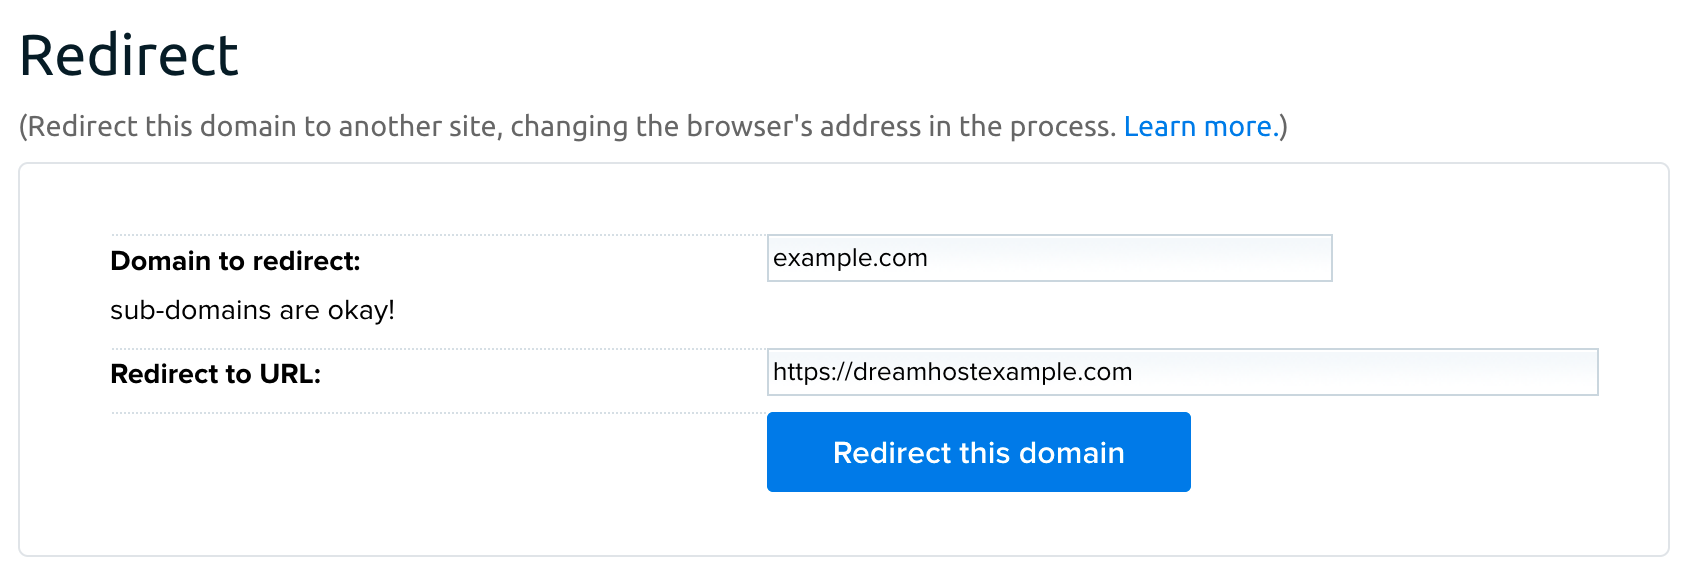 Redirect domain